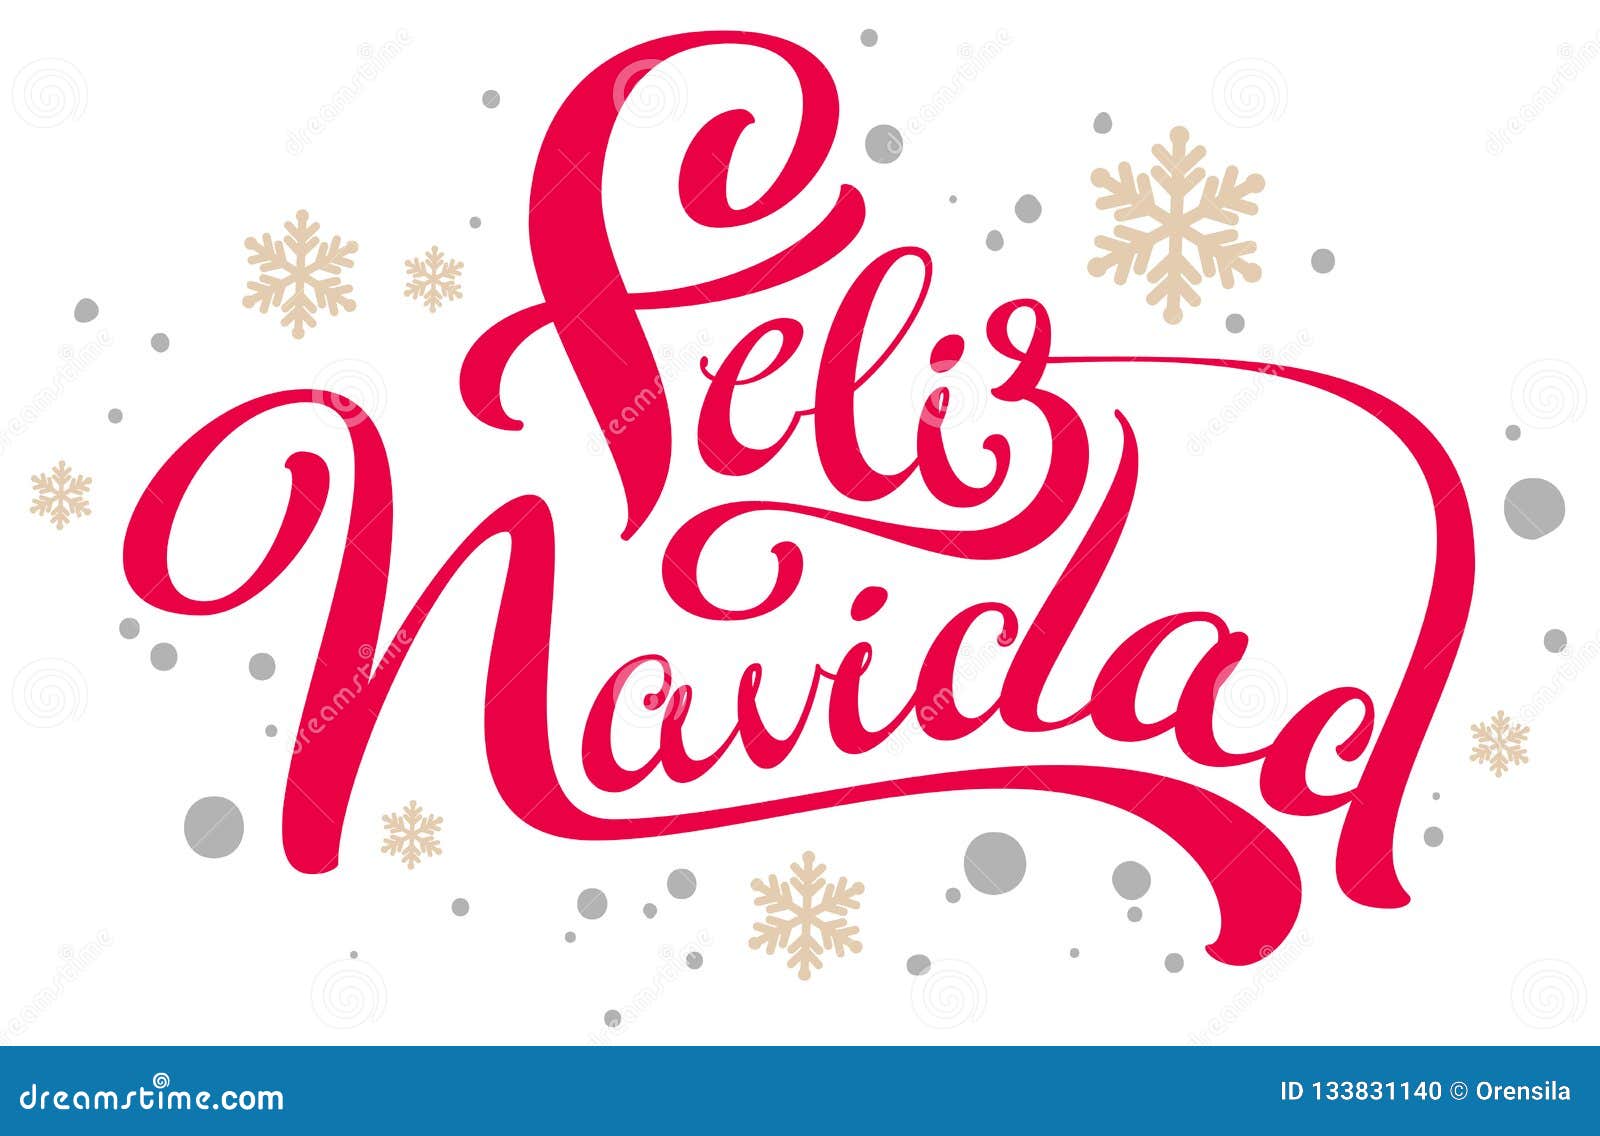 feliz navidad text merry christmas translation from spanish